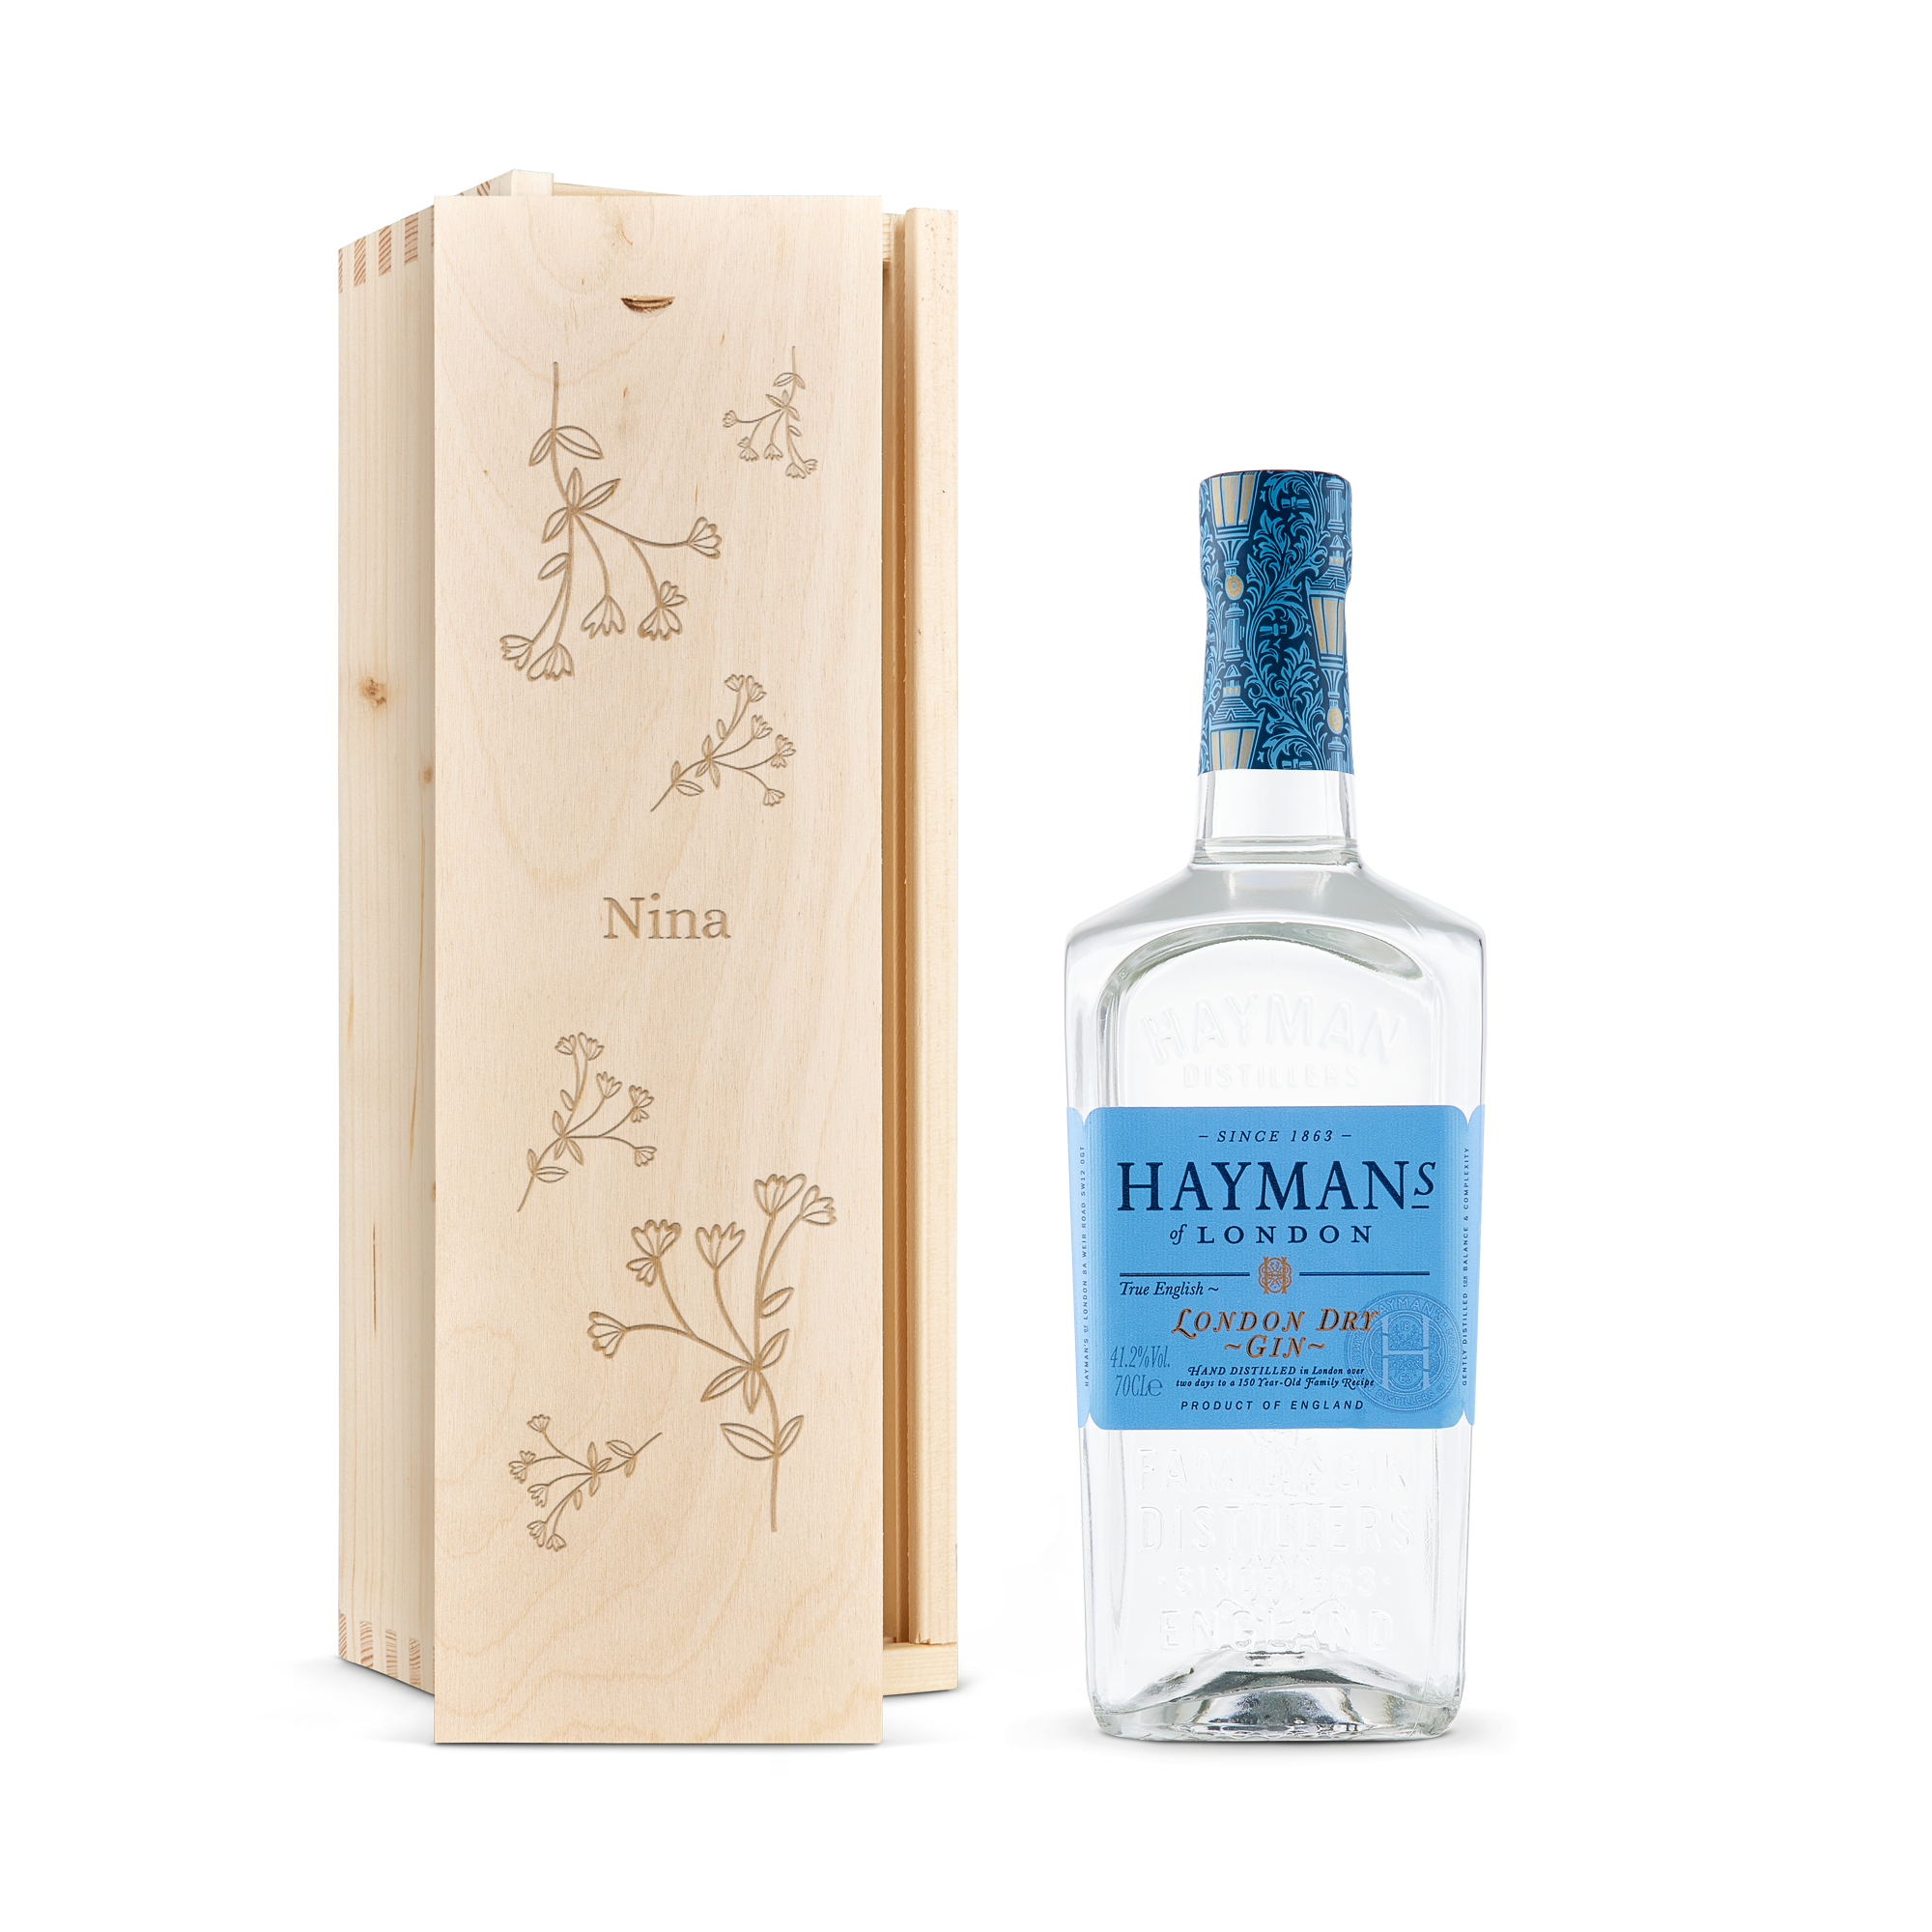 Haymans London Dry Gin